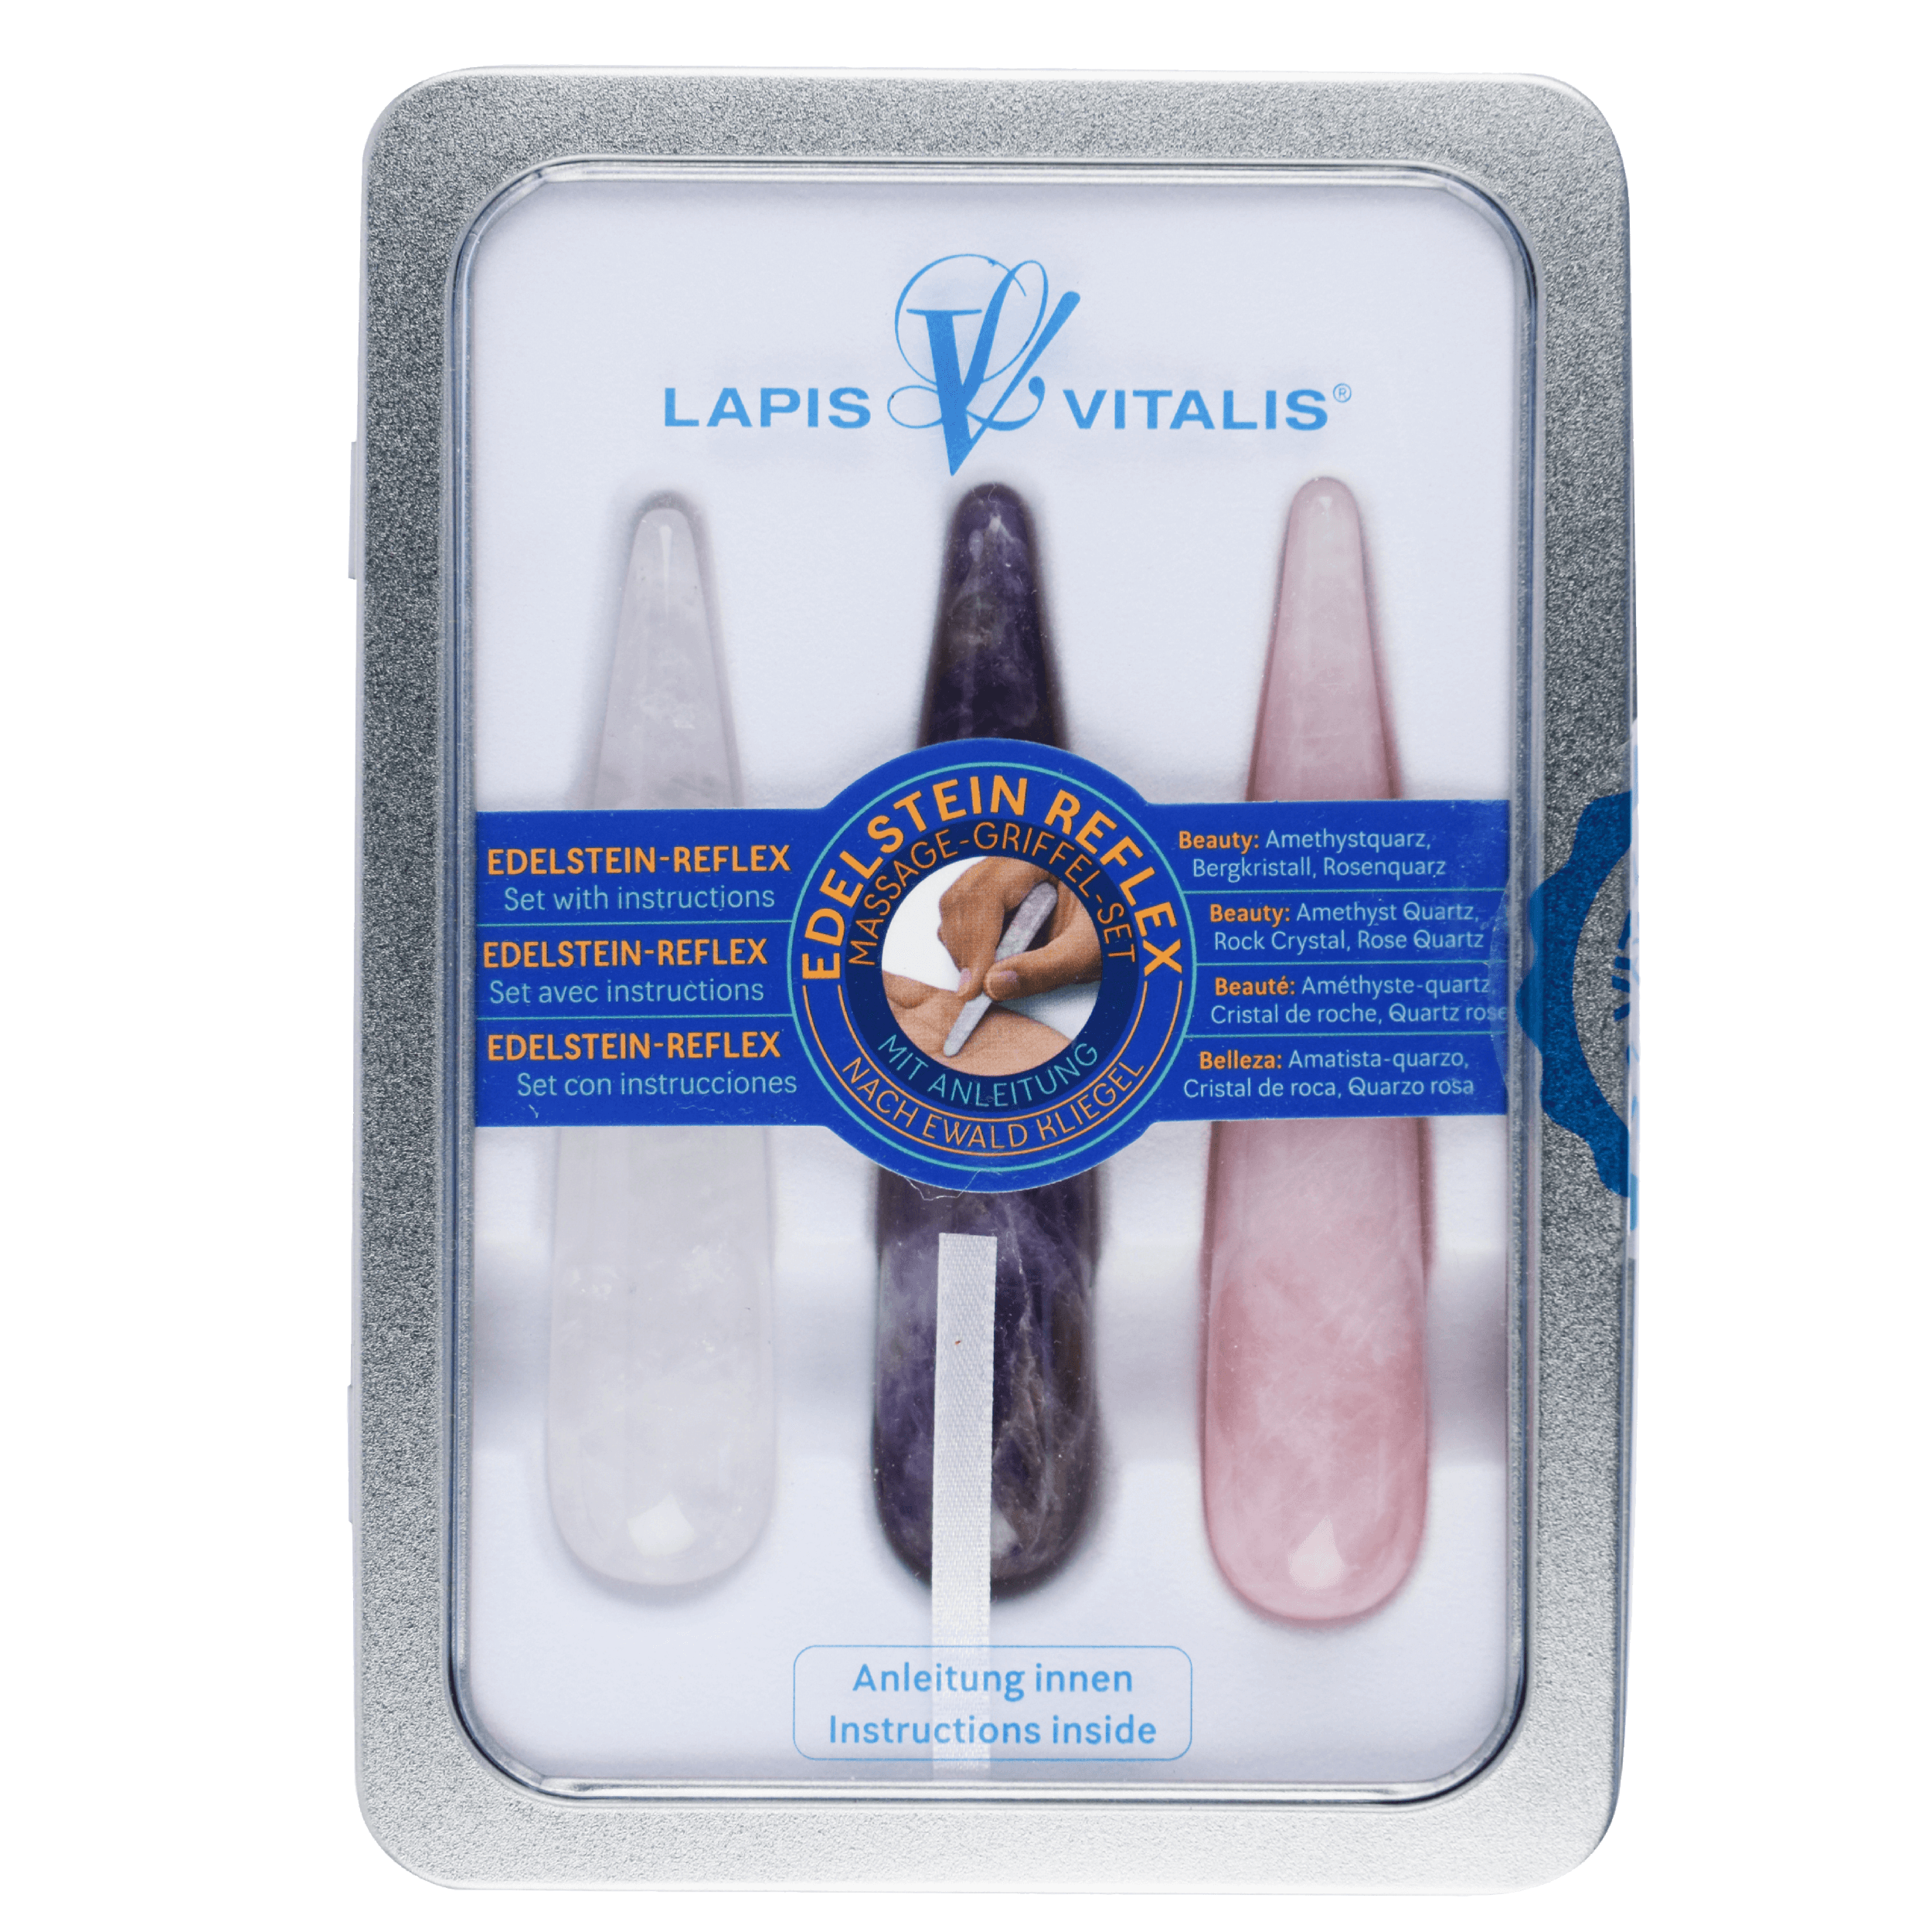 Lapis Vitalis “Beauty” Massagegriffel-Set 1 Set